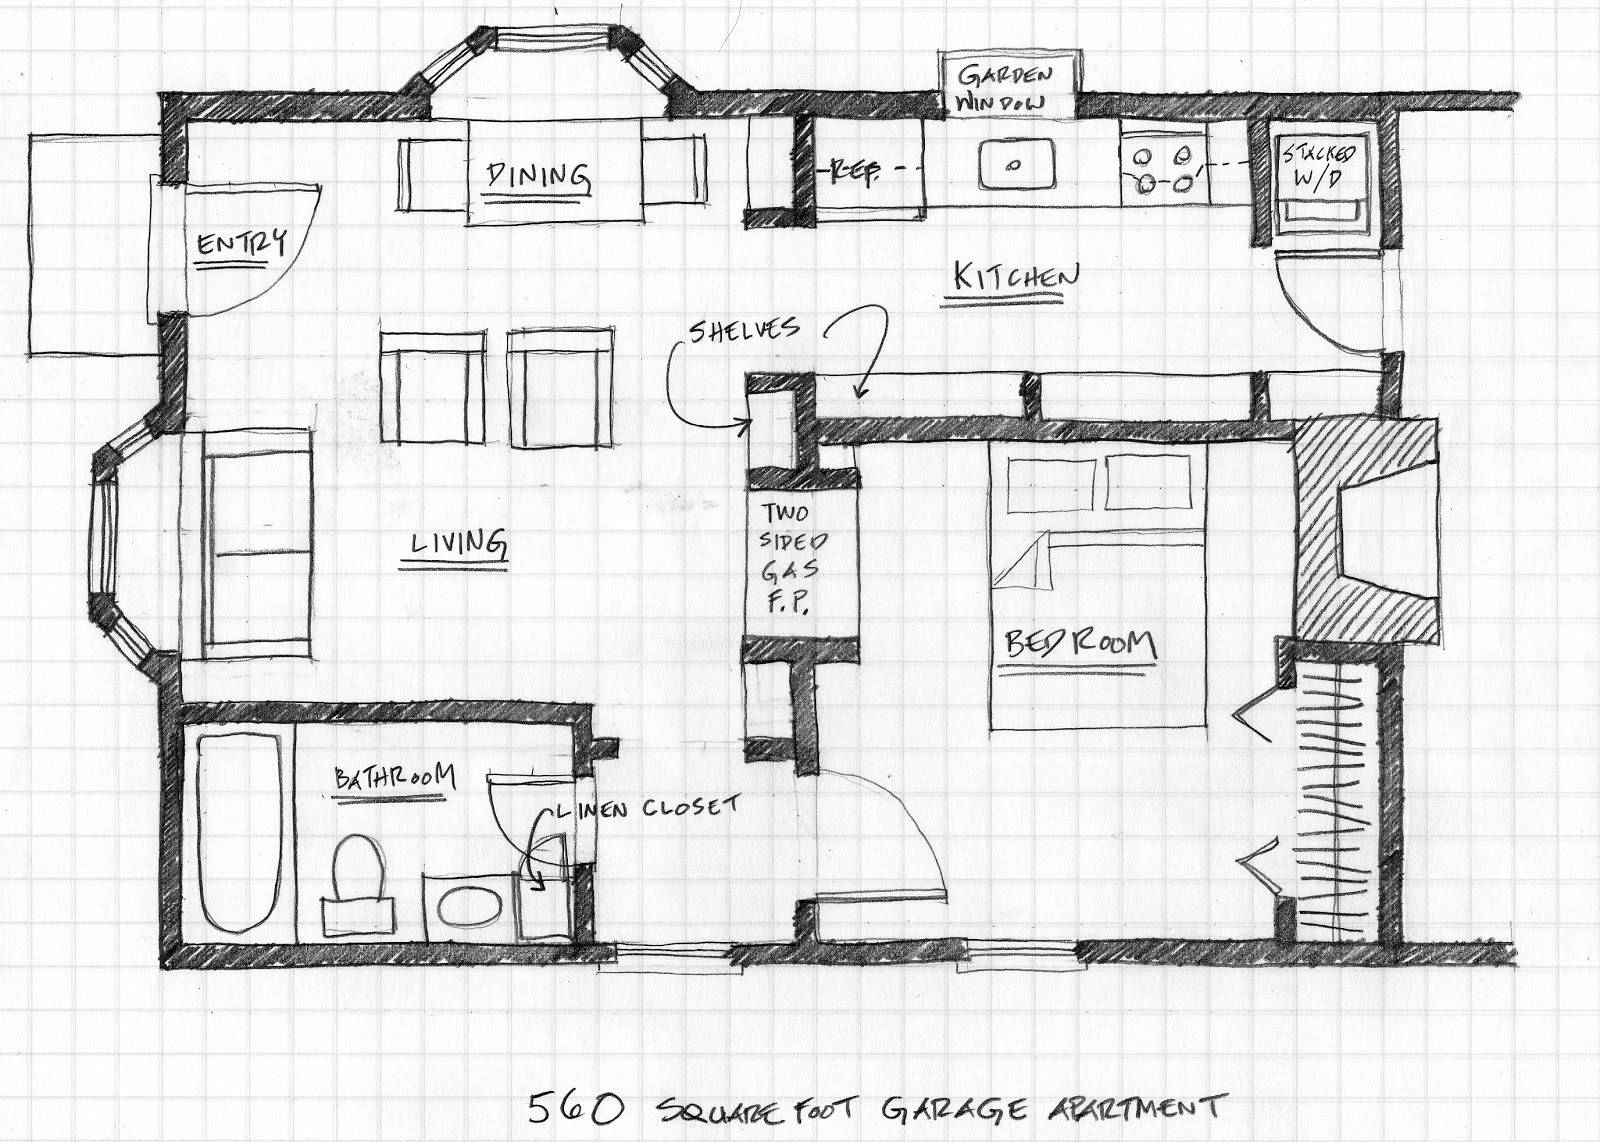 план чертеж дома с мебелью